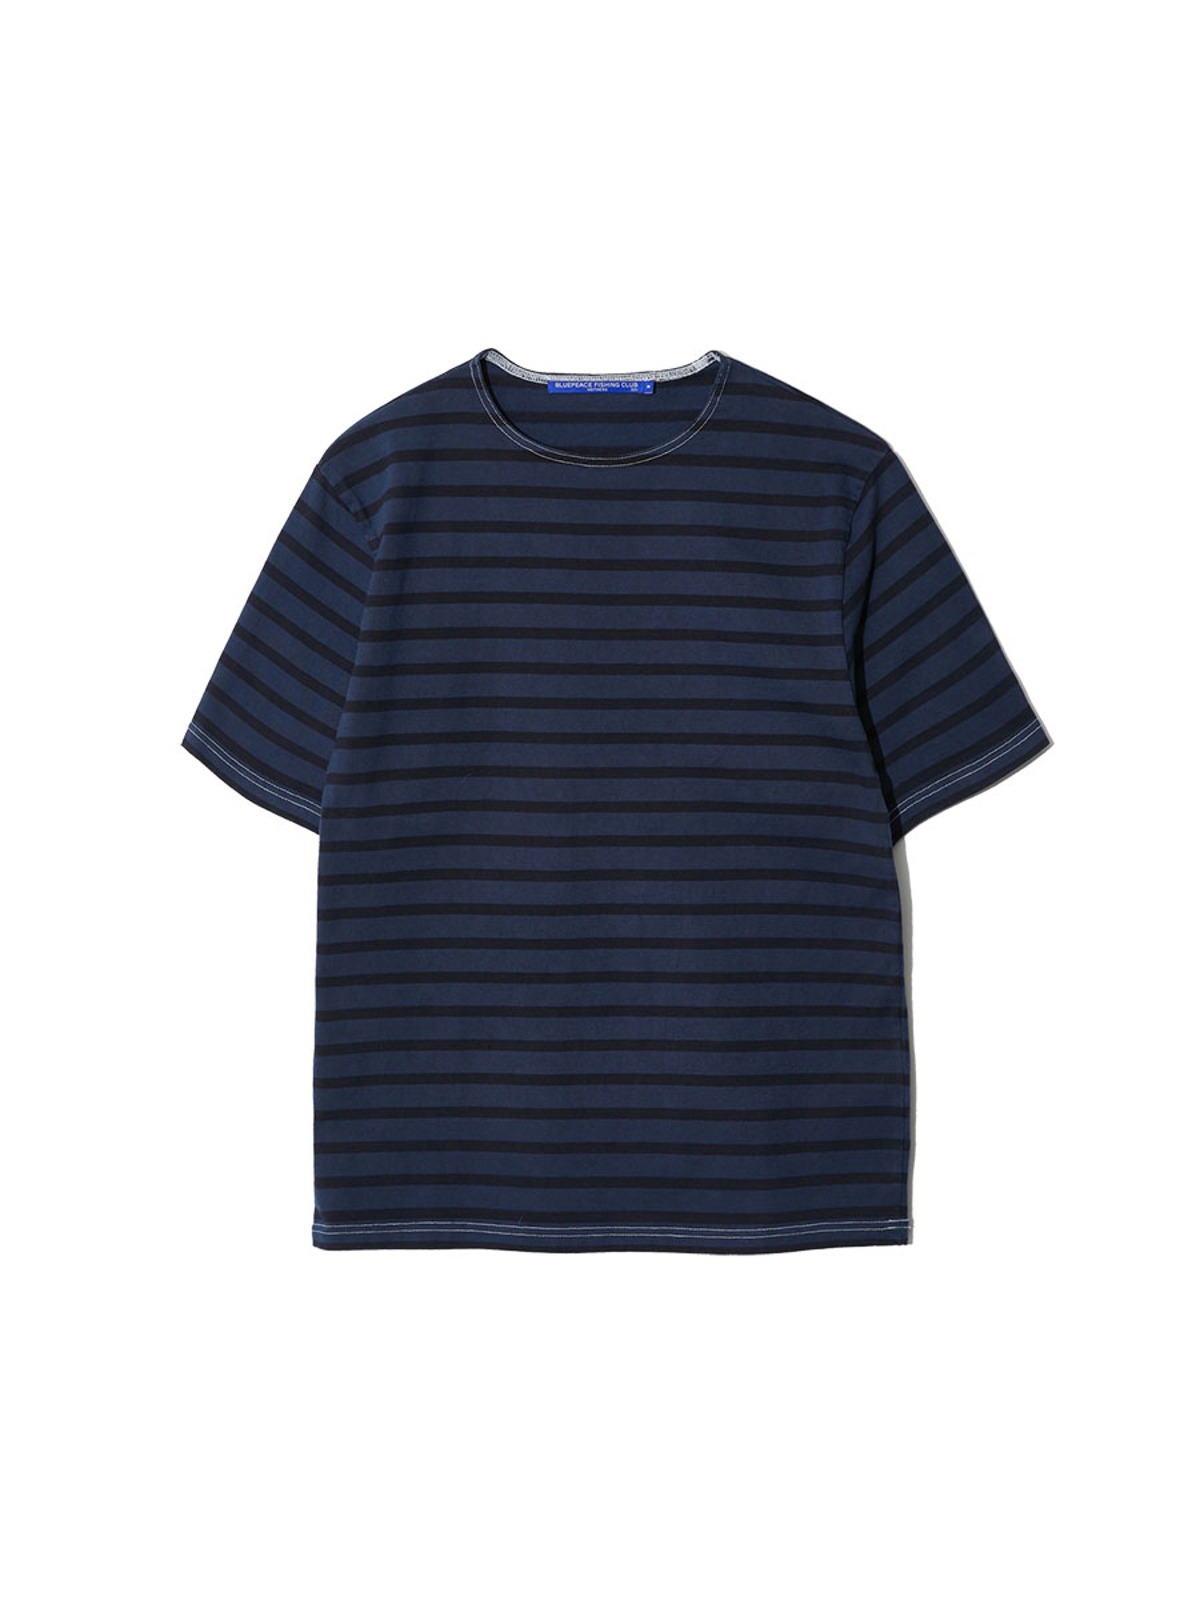 Garment Dyed Stripe S/S T-Shirt (Dark Navy Stripe)